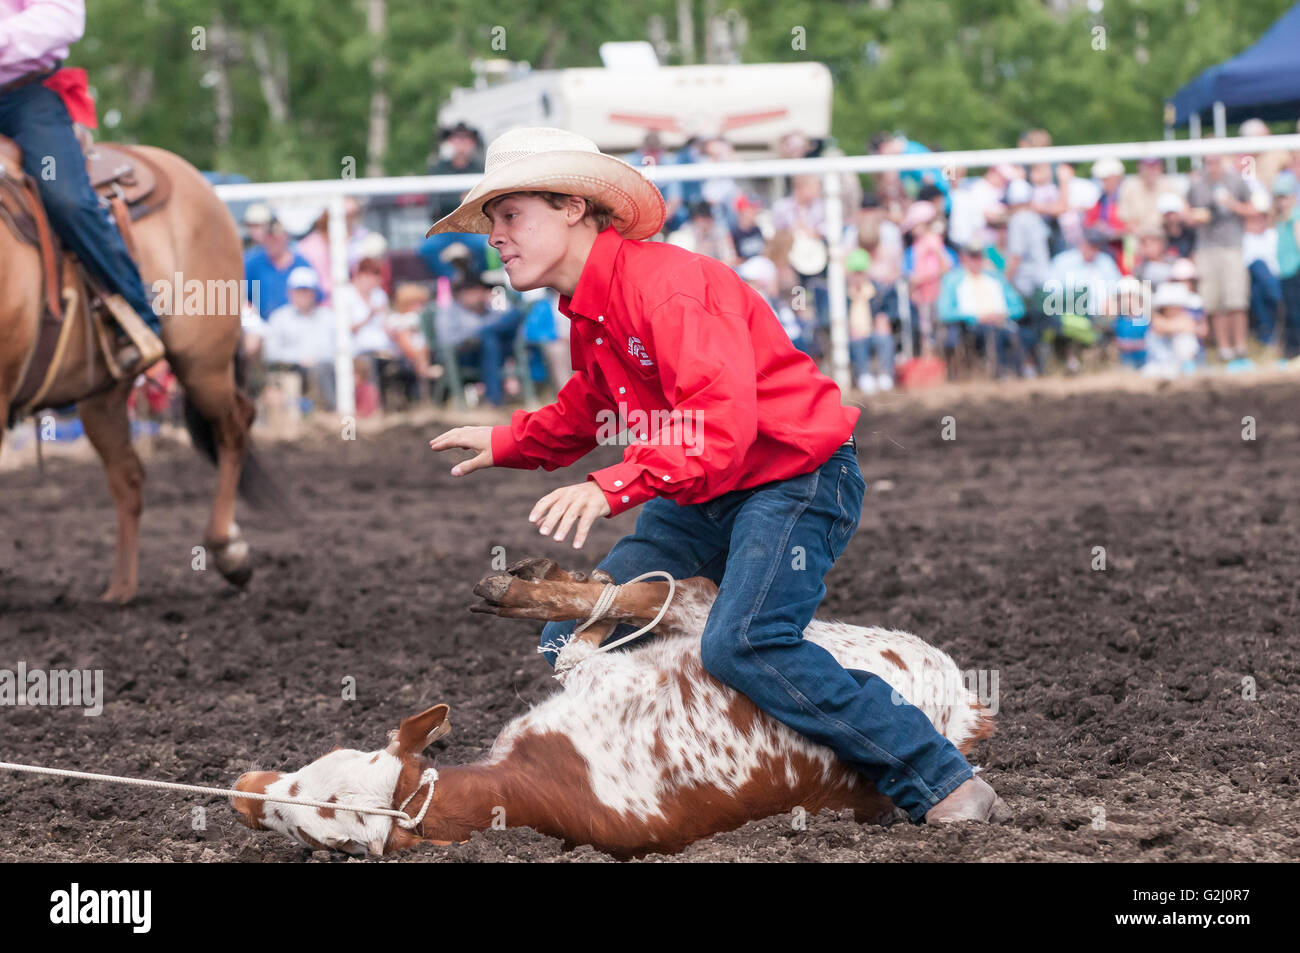 Tie-down calf roping, Dog Pound rodeo, Dog Pound, Alberta, Canada Stock Photo